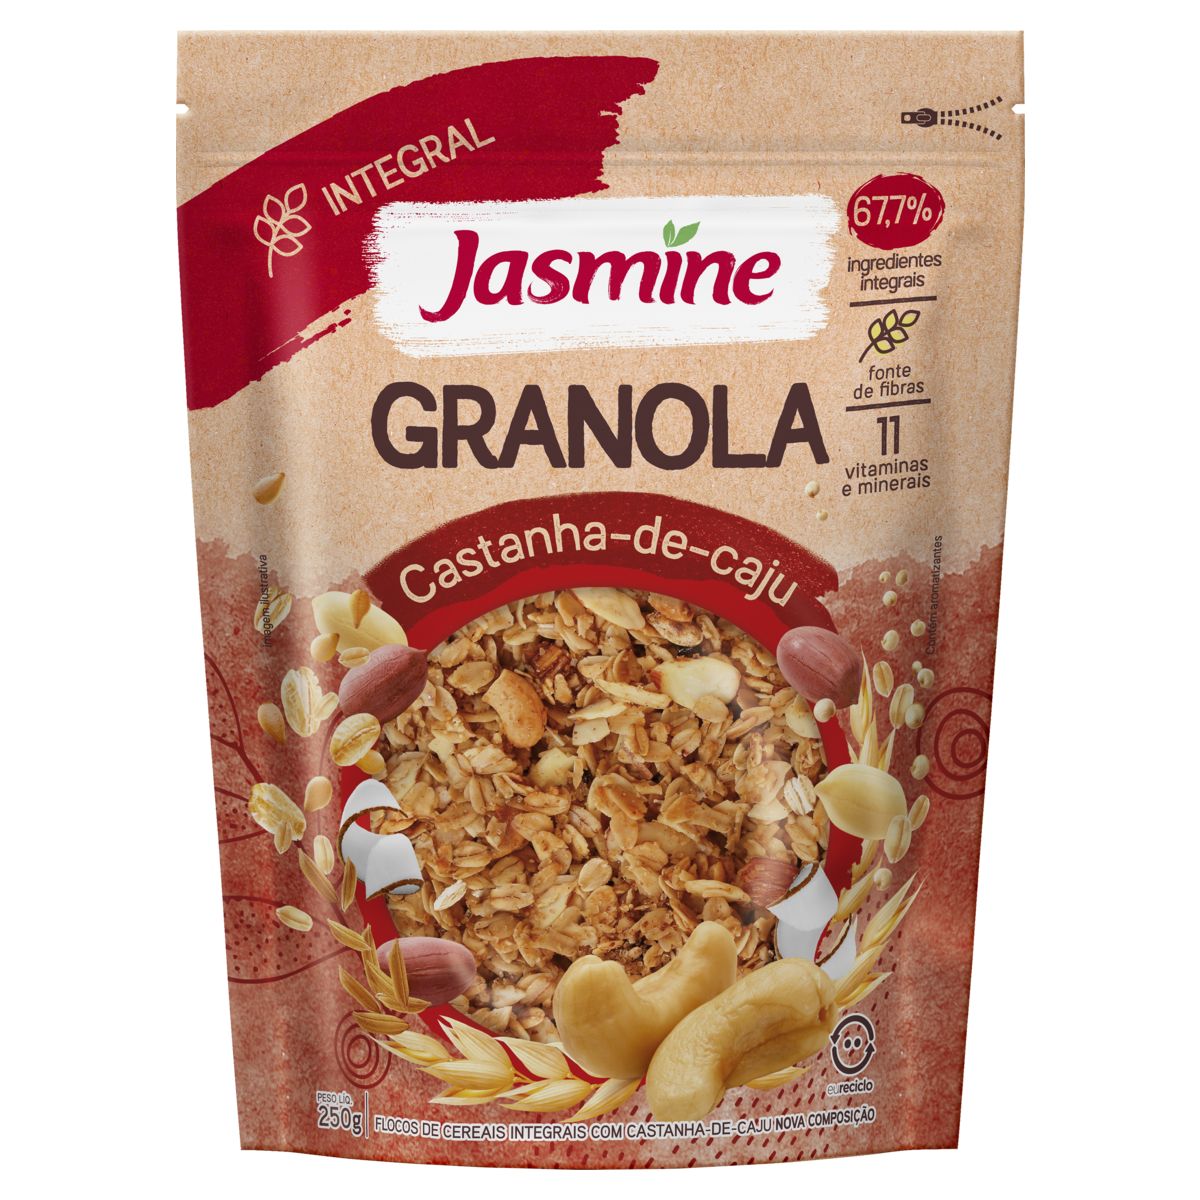 Granola Jasmine Castanha-de-Caju 67,7% Integral 250g image number 0